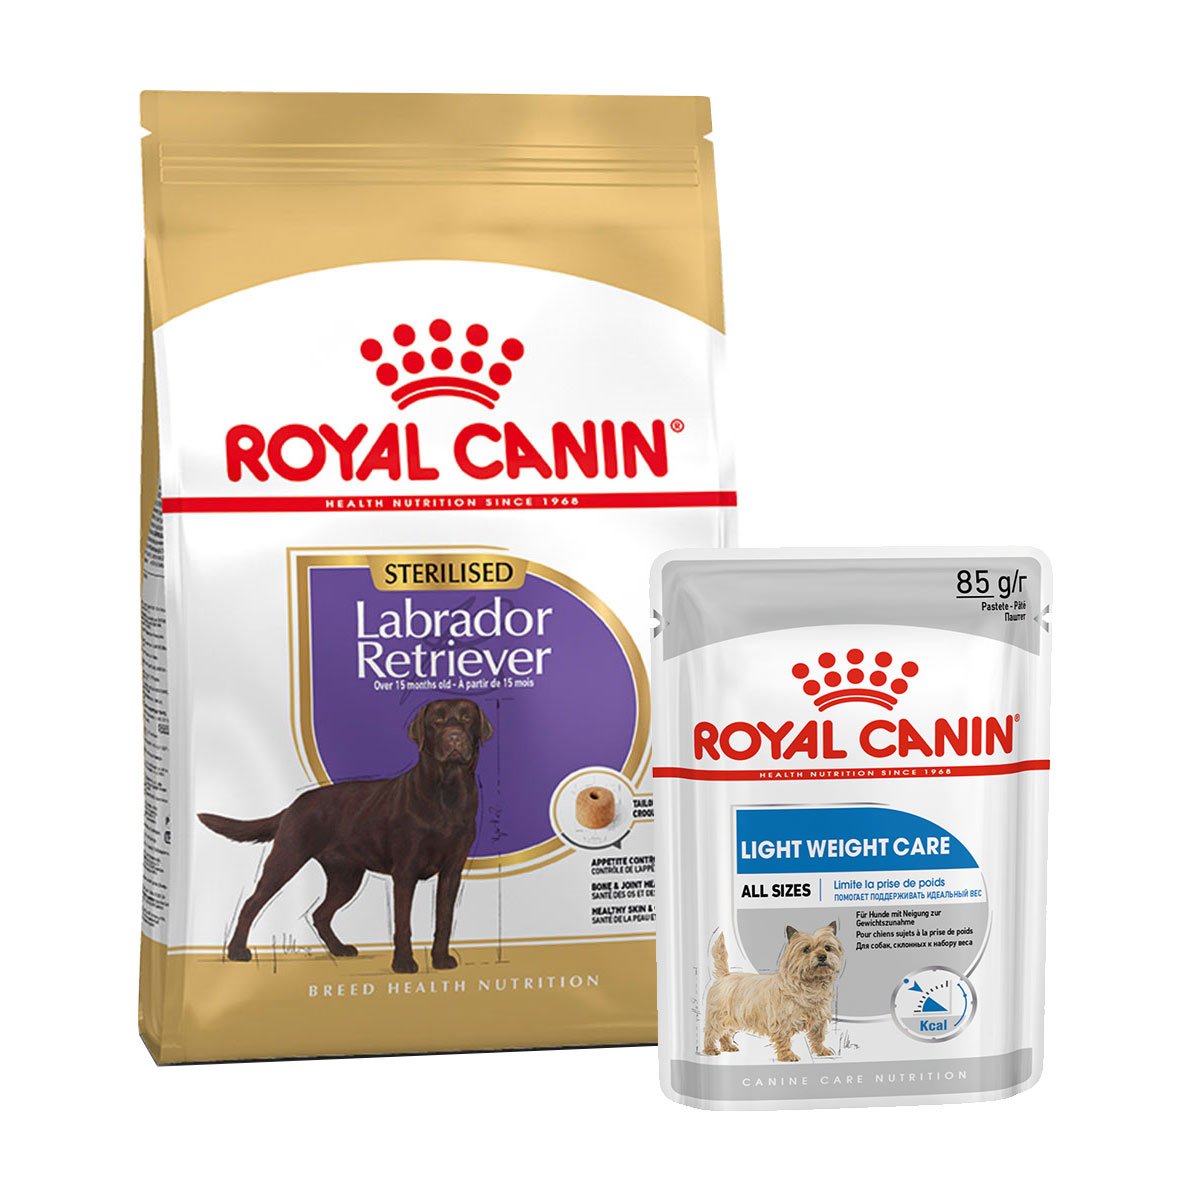 ROYAL CANIN Labrador Retriever Sterilised 12kg + LIGHT WEIGHT CARE Mousse 12x85g von Royal Canin